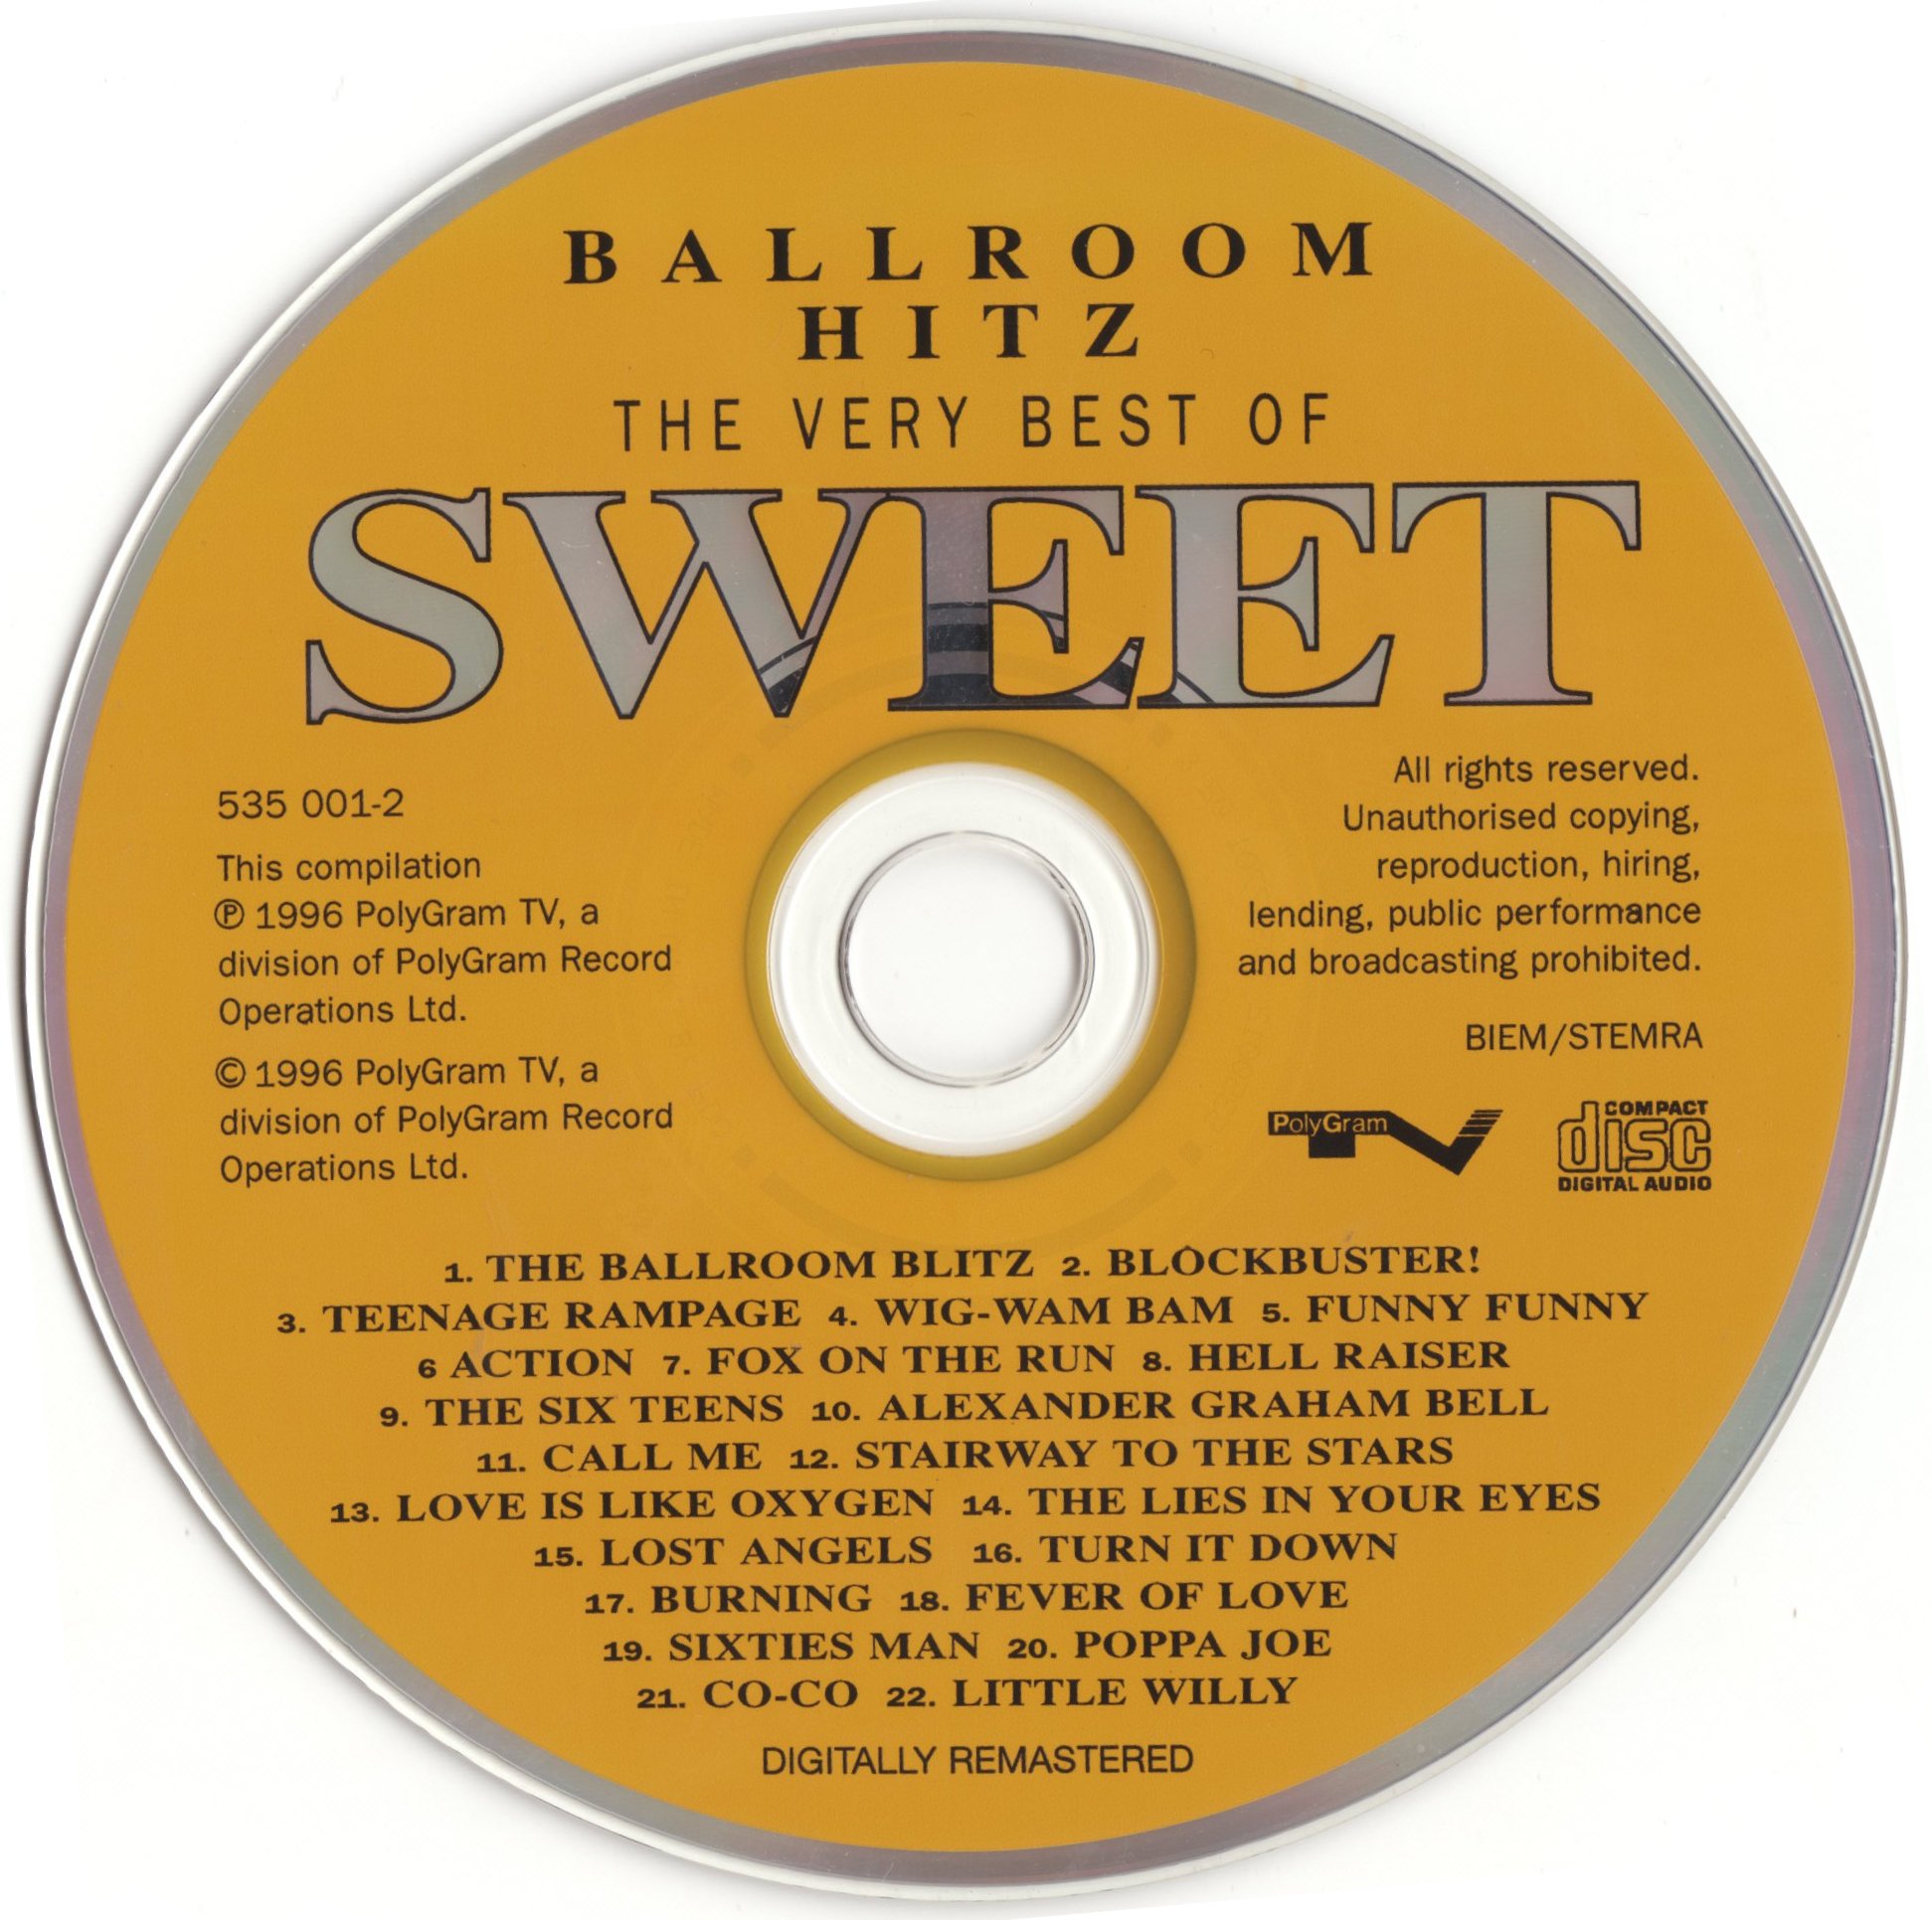 Sweet ballroom. The very best of Sweet. The very best of Sweet 2005. The Ballroom Blitz Sweet. Sweet the best картинки.